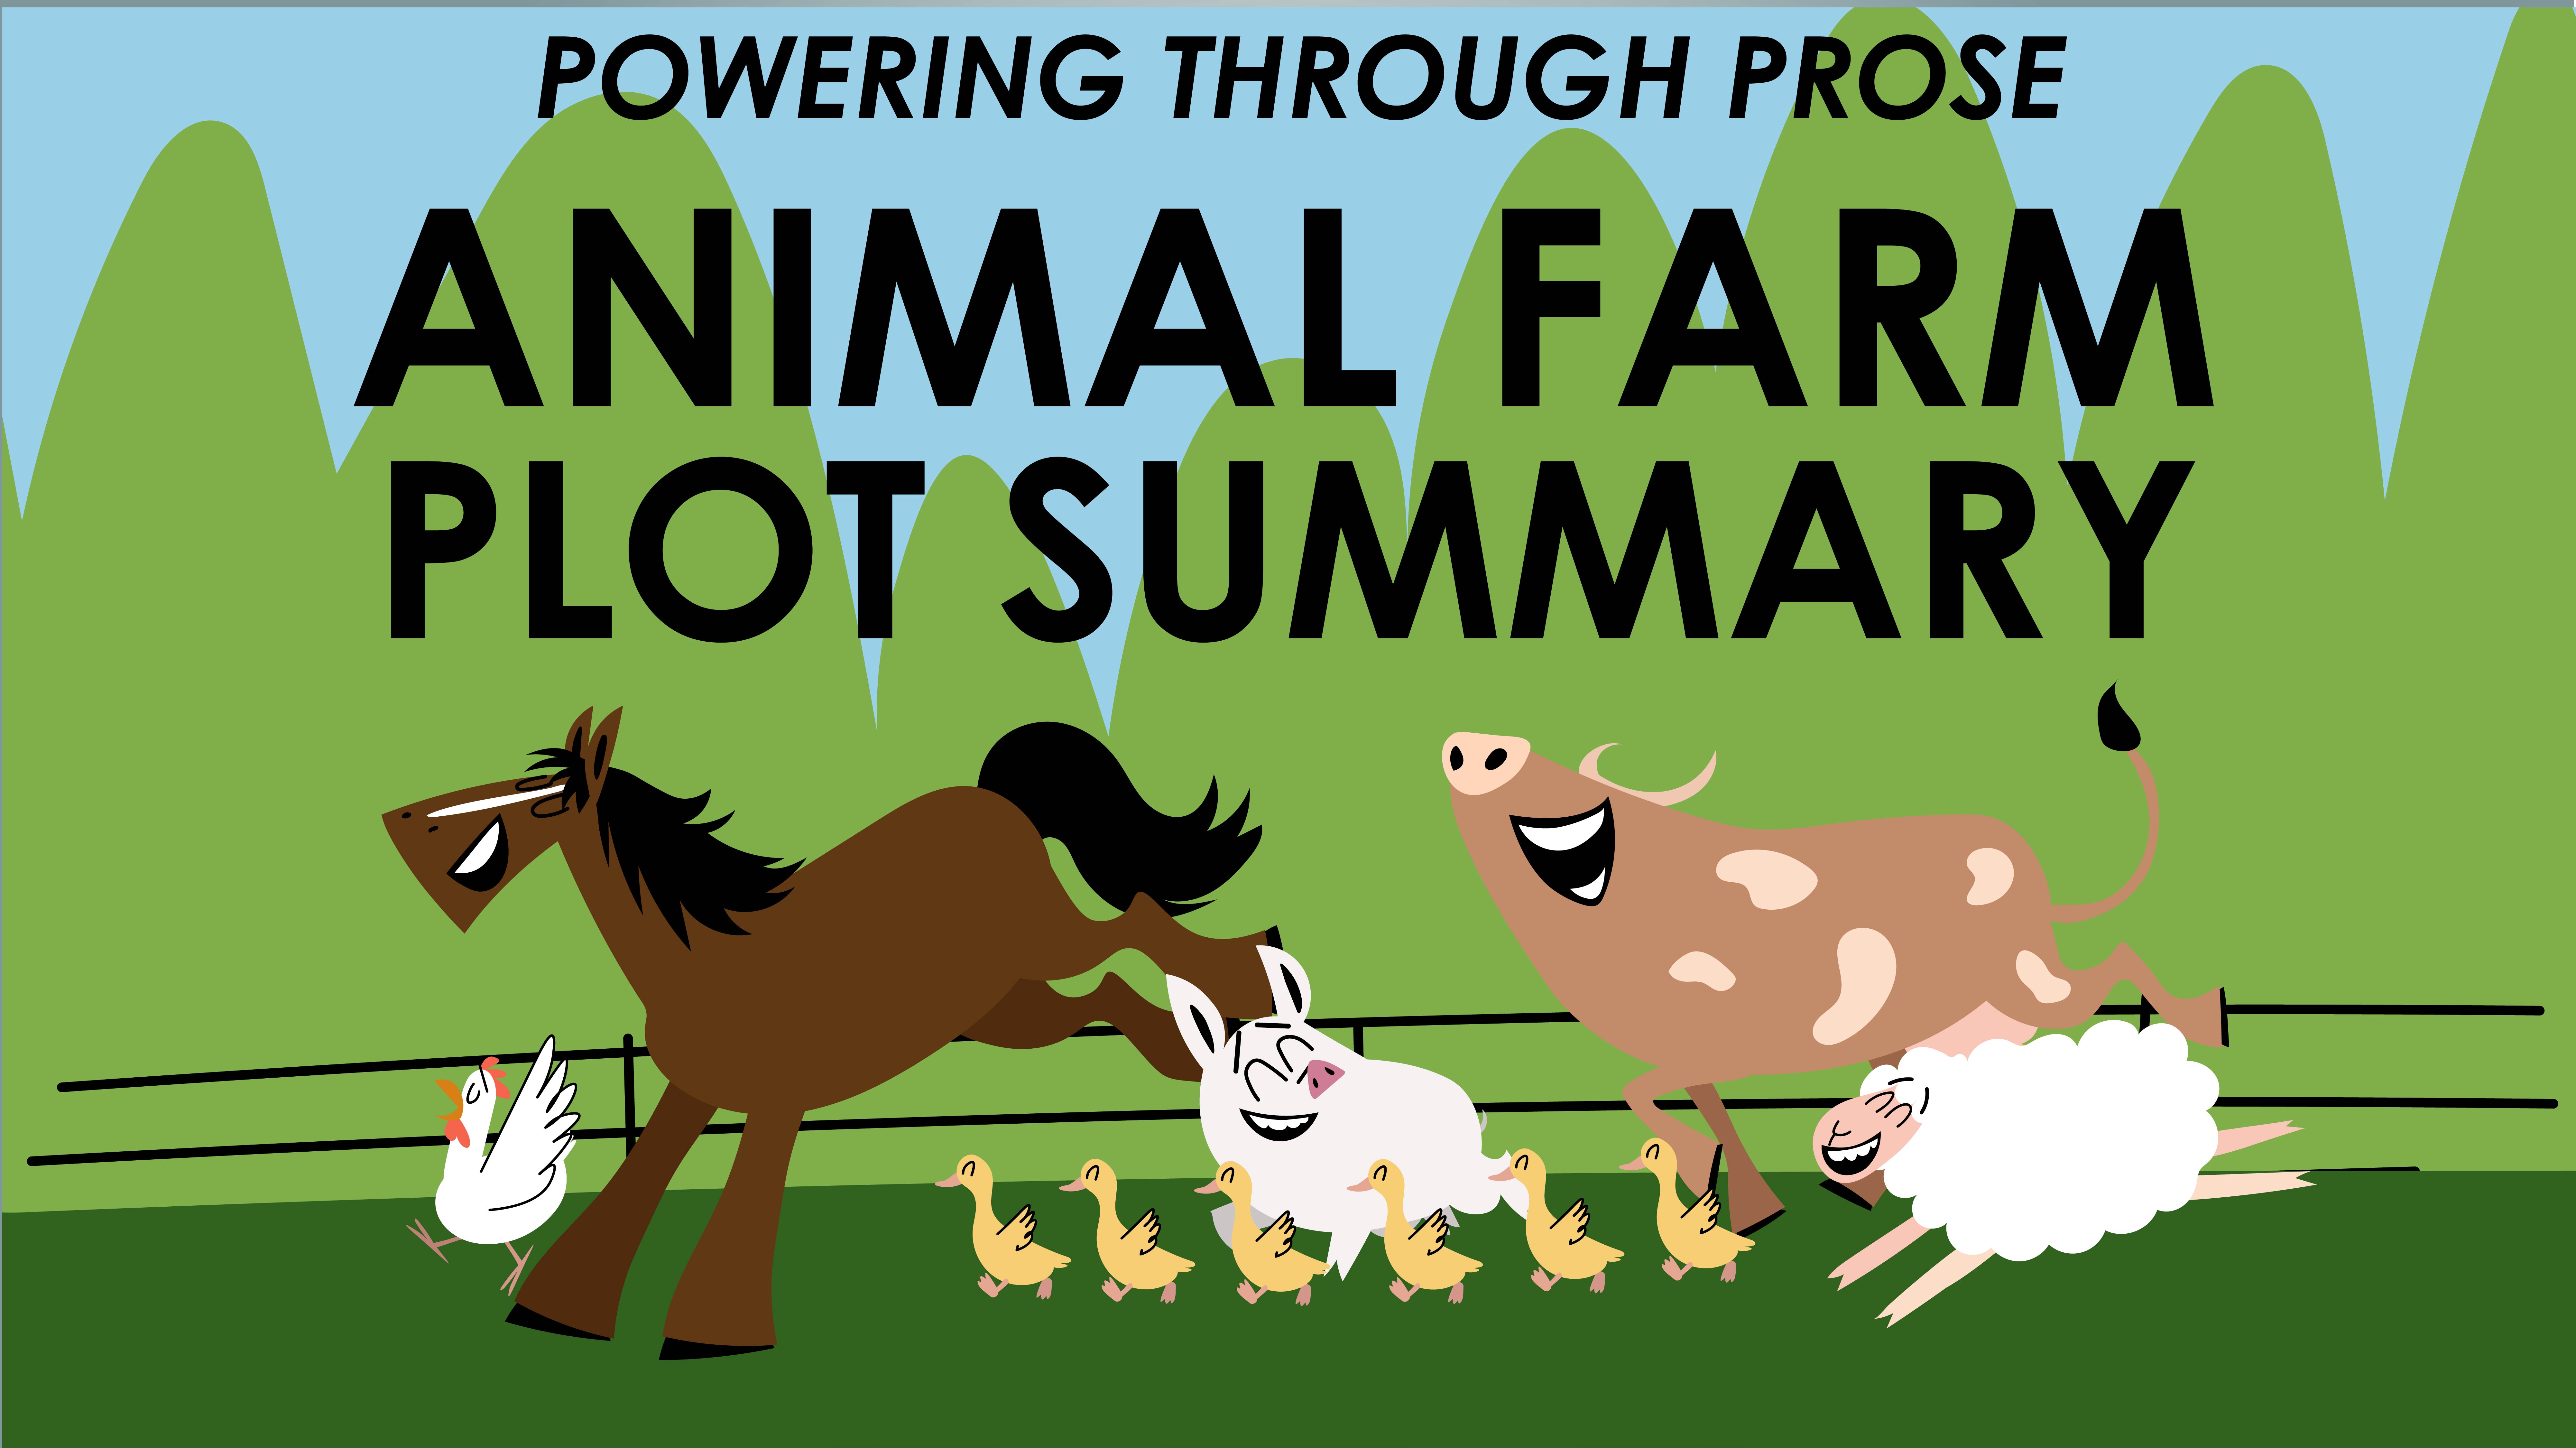 Animal Farm - George Orwell - Plot Summary - Powering Through Prose Series